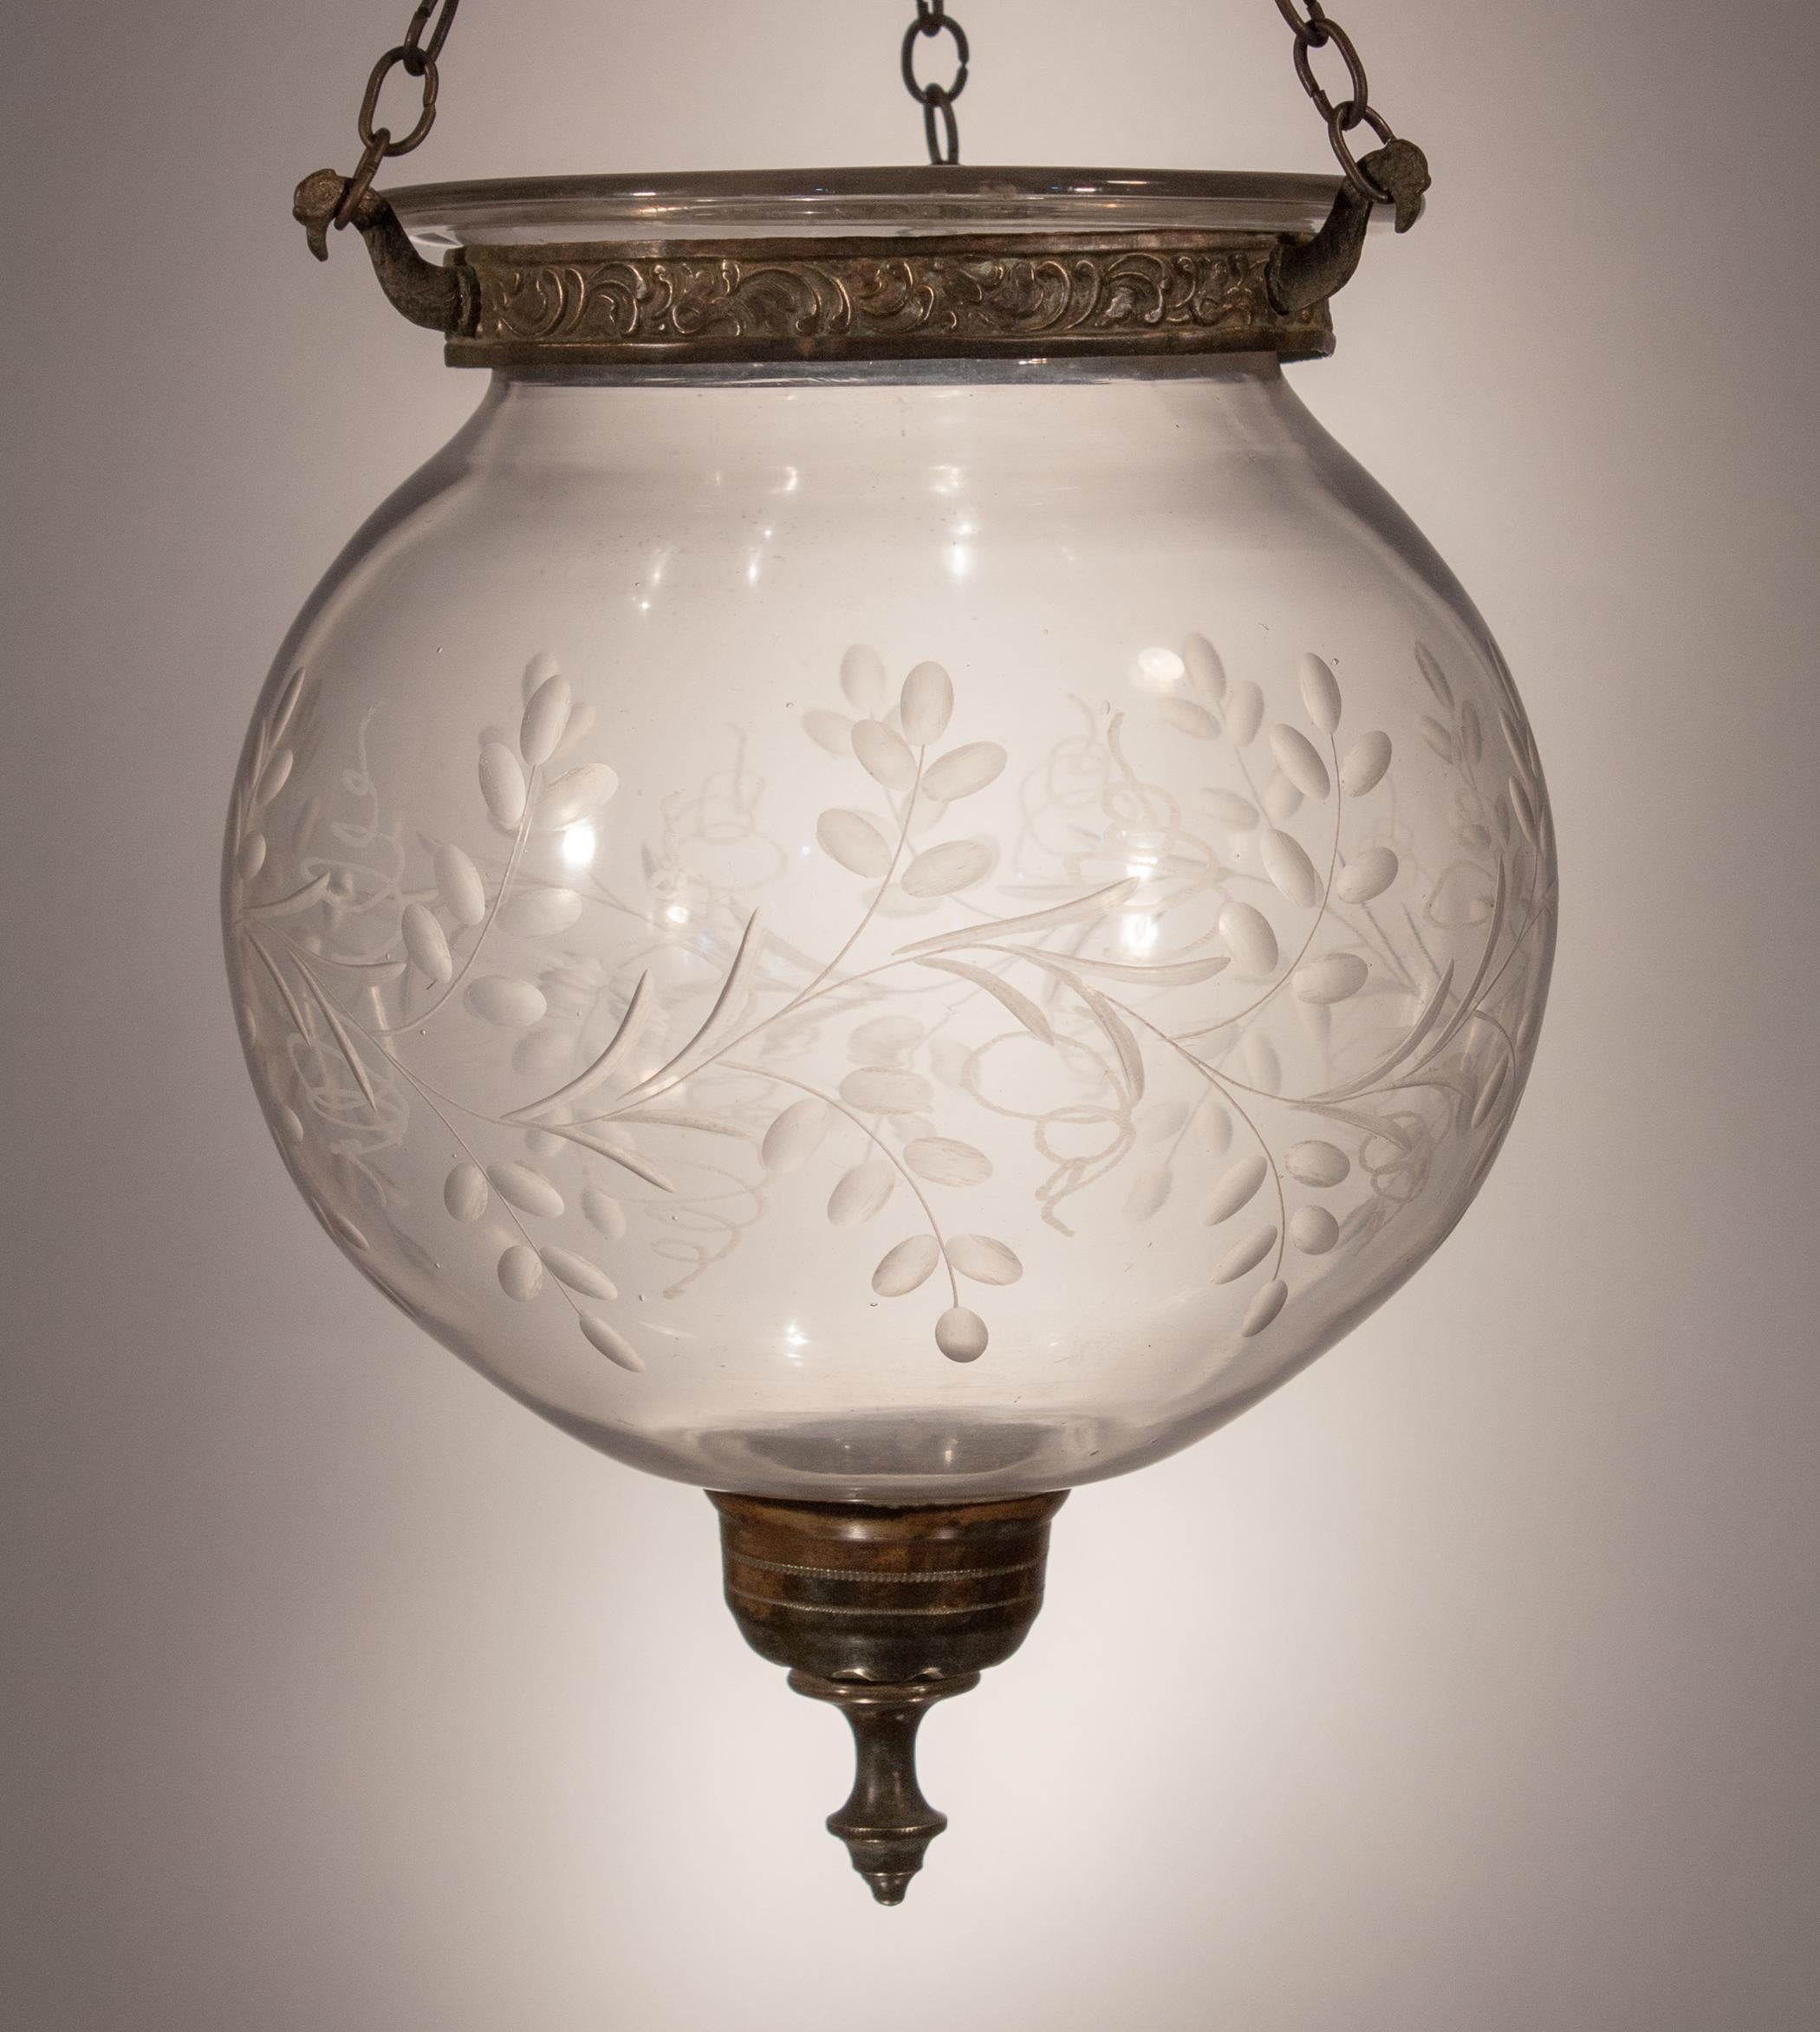  Globe Bell Jar Lantern with Vine Etching 2